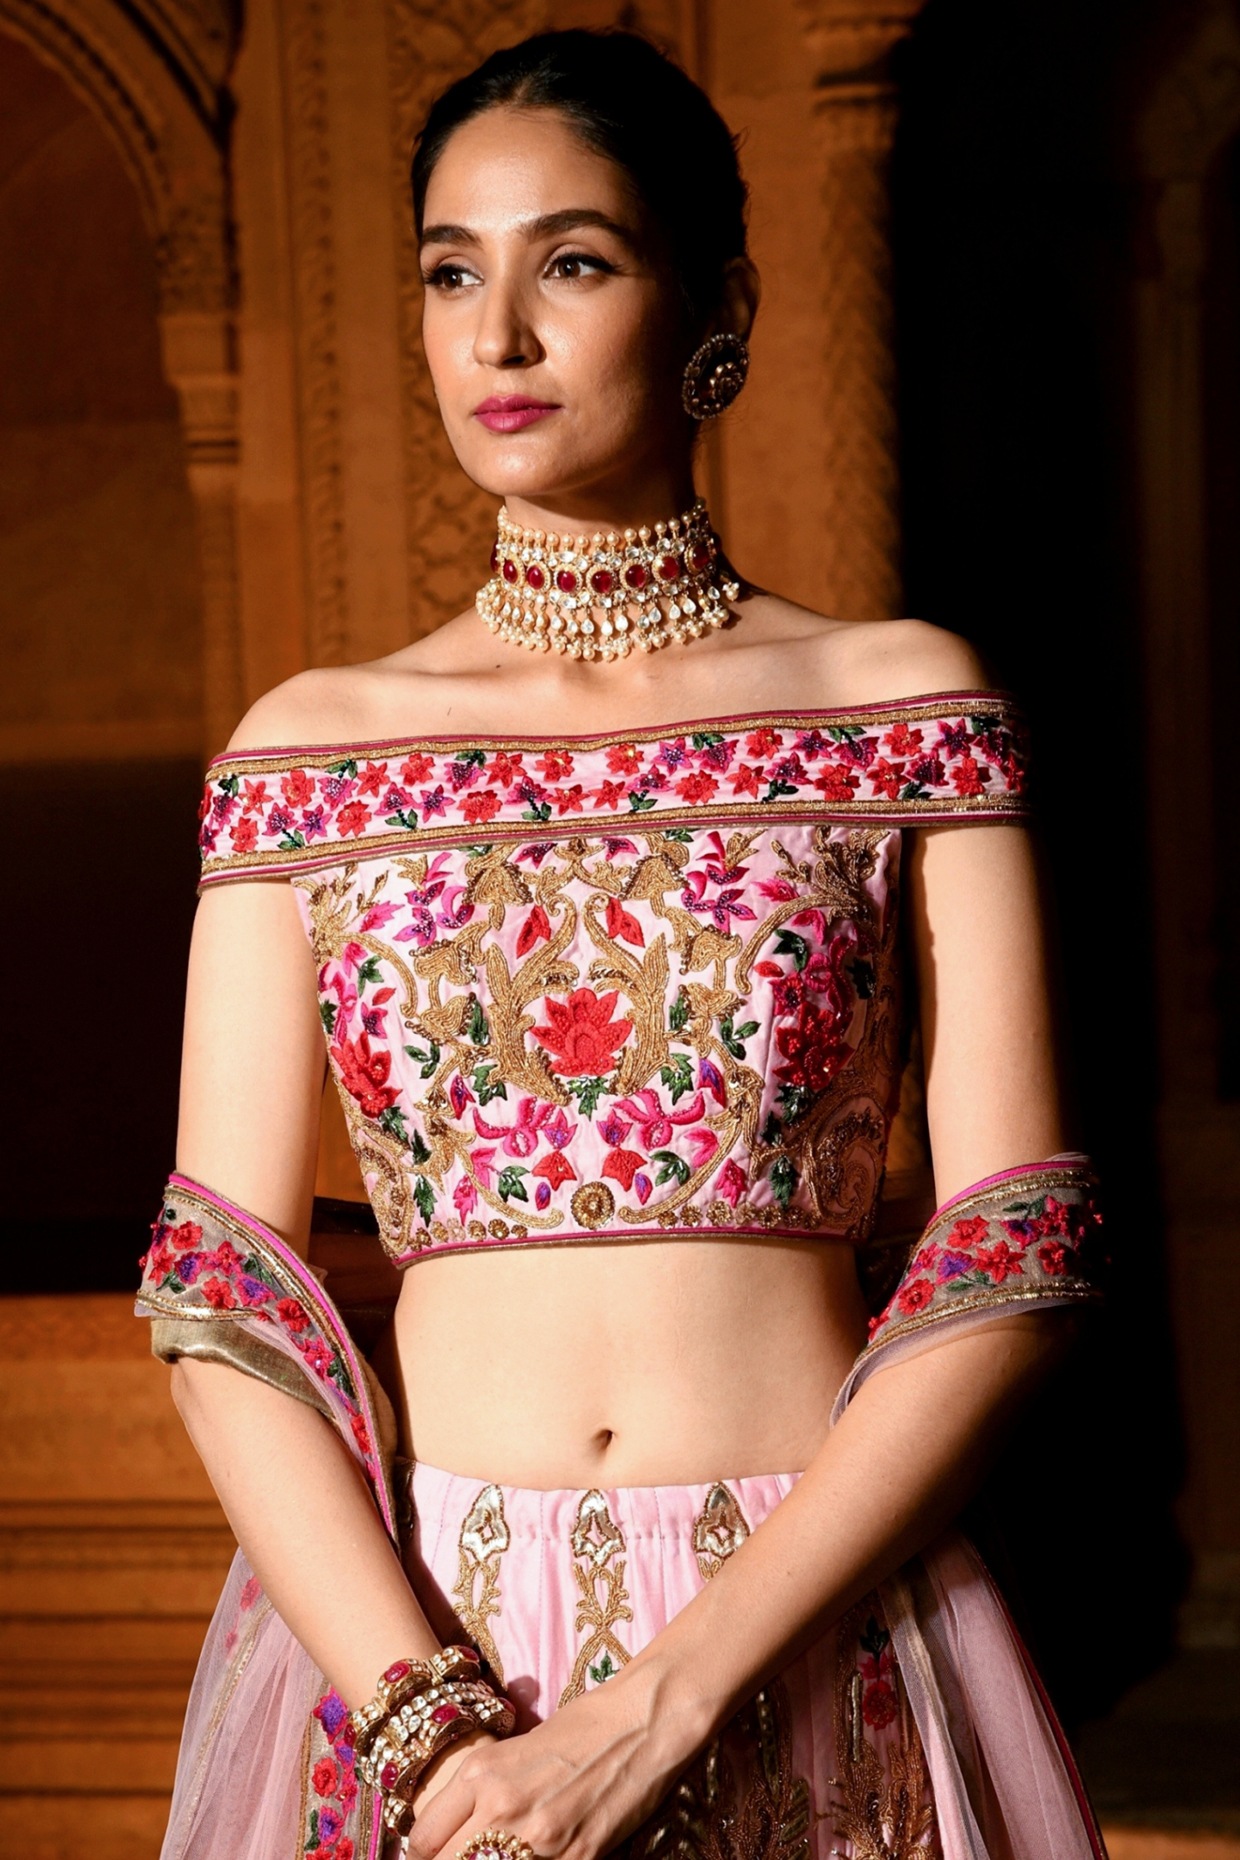 Coral Pink Indian Wedding Outfit: Women's Mirrorwork Lehenga Choli | Indian  wedding outfit, Indian bridal, Pink bridal lehenga